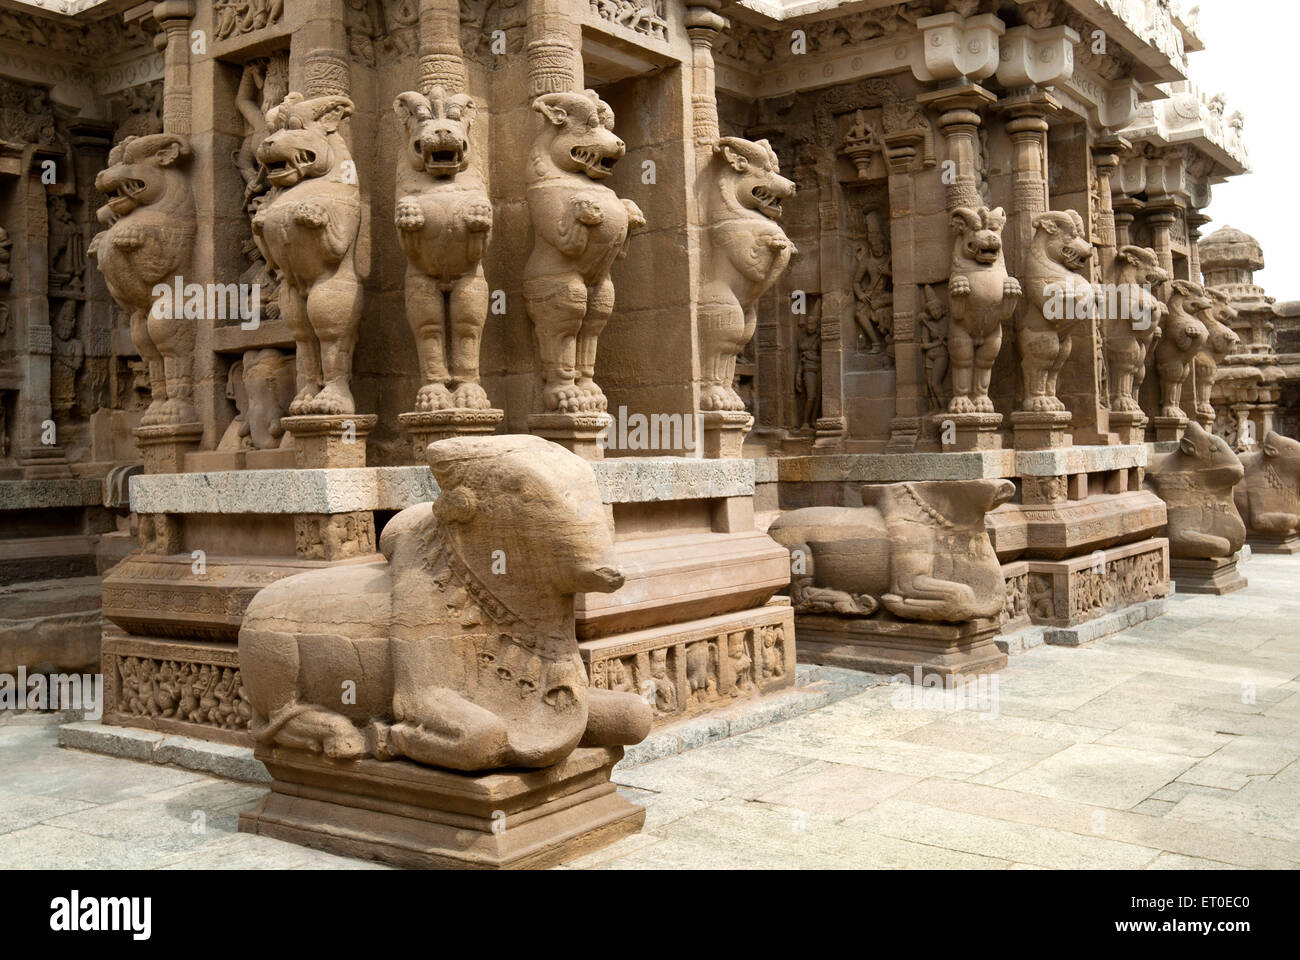 Kailasanatha temple de Kanchipuram kancheepuram ; ; ; ; Tamil Nadu Inde Banque D'Images